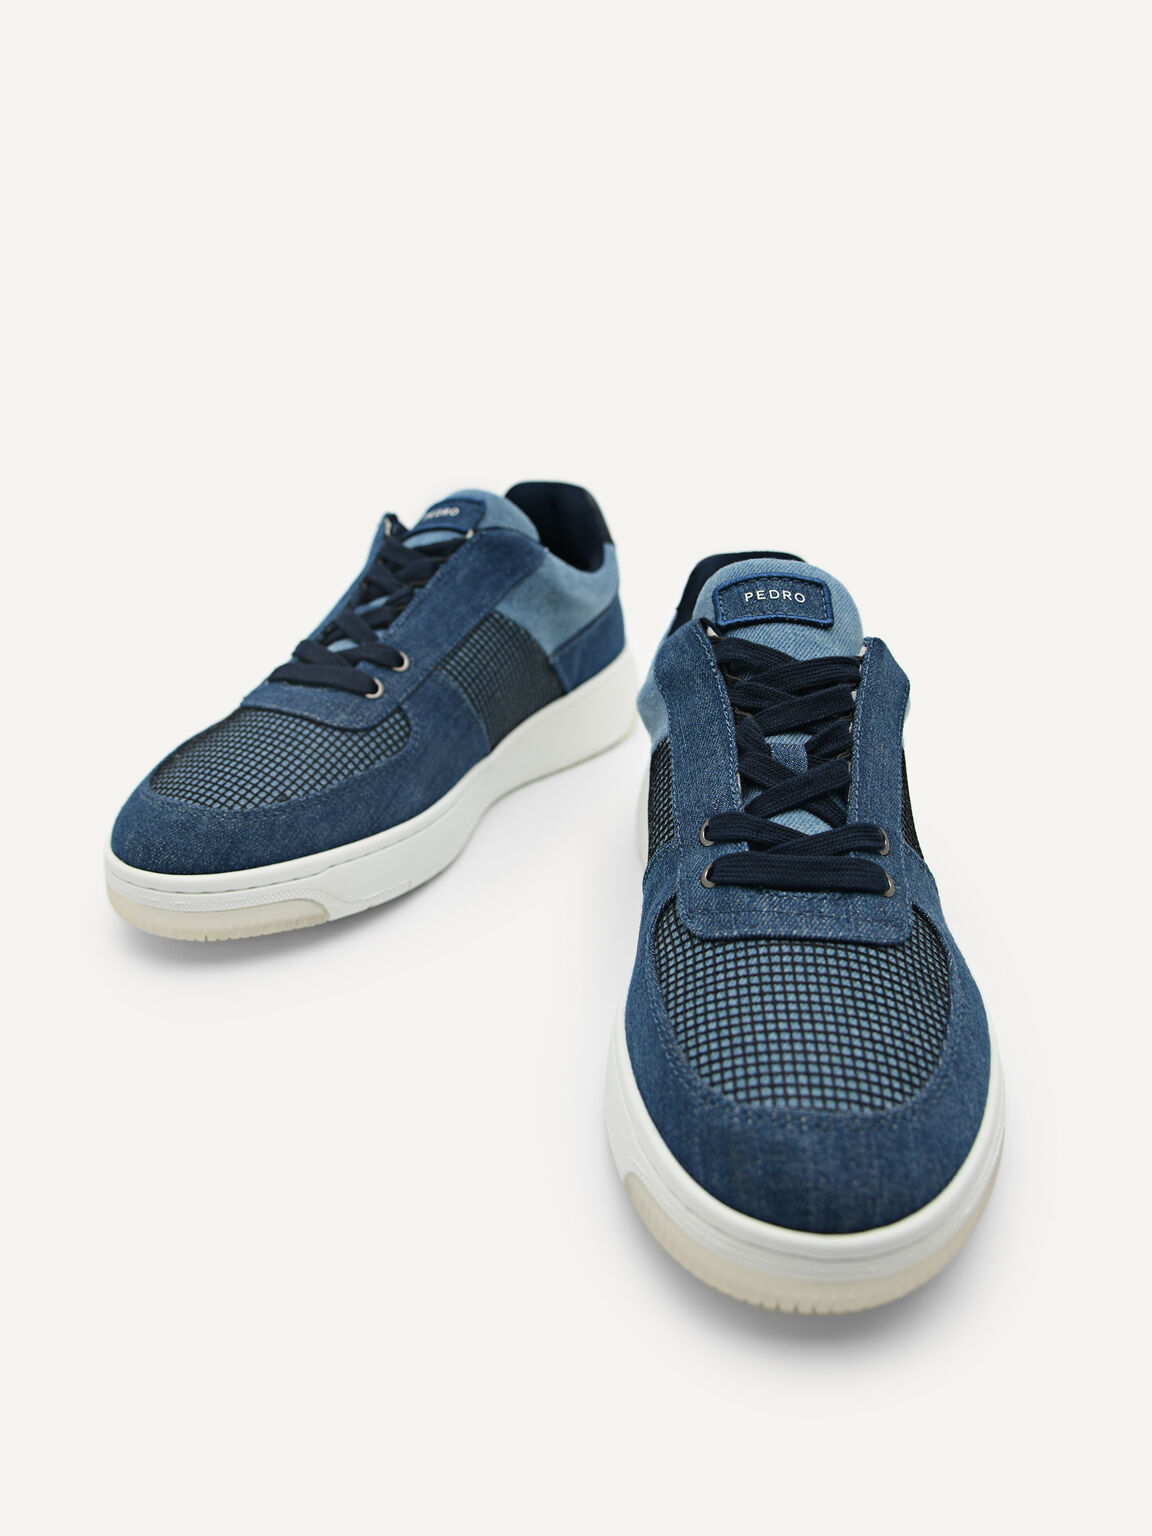 Denim Sneakers, Navy